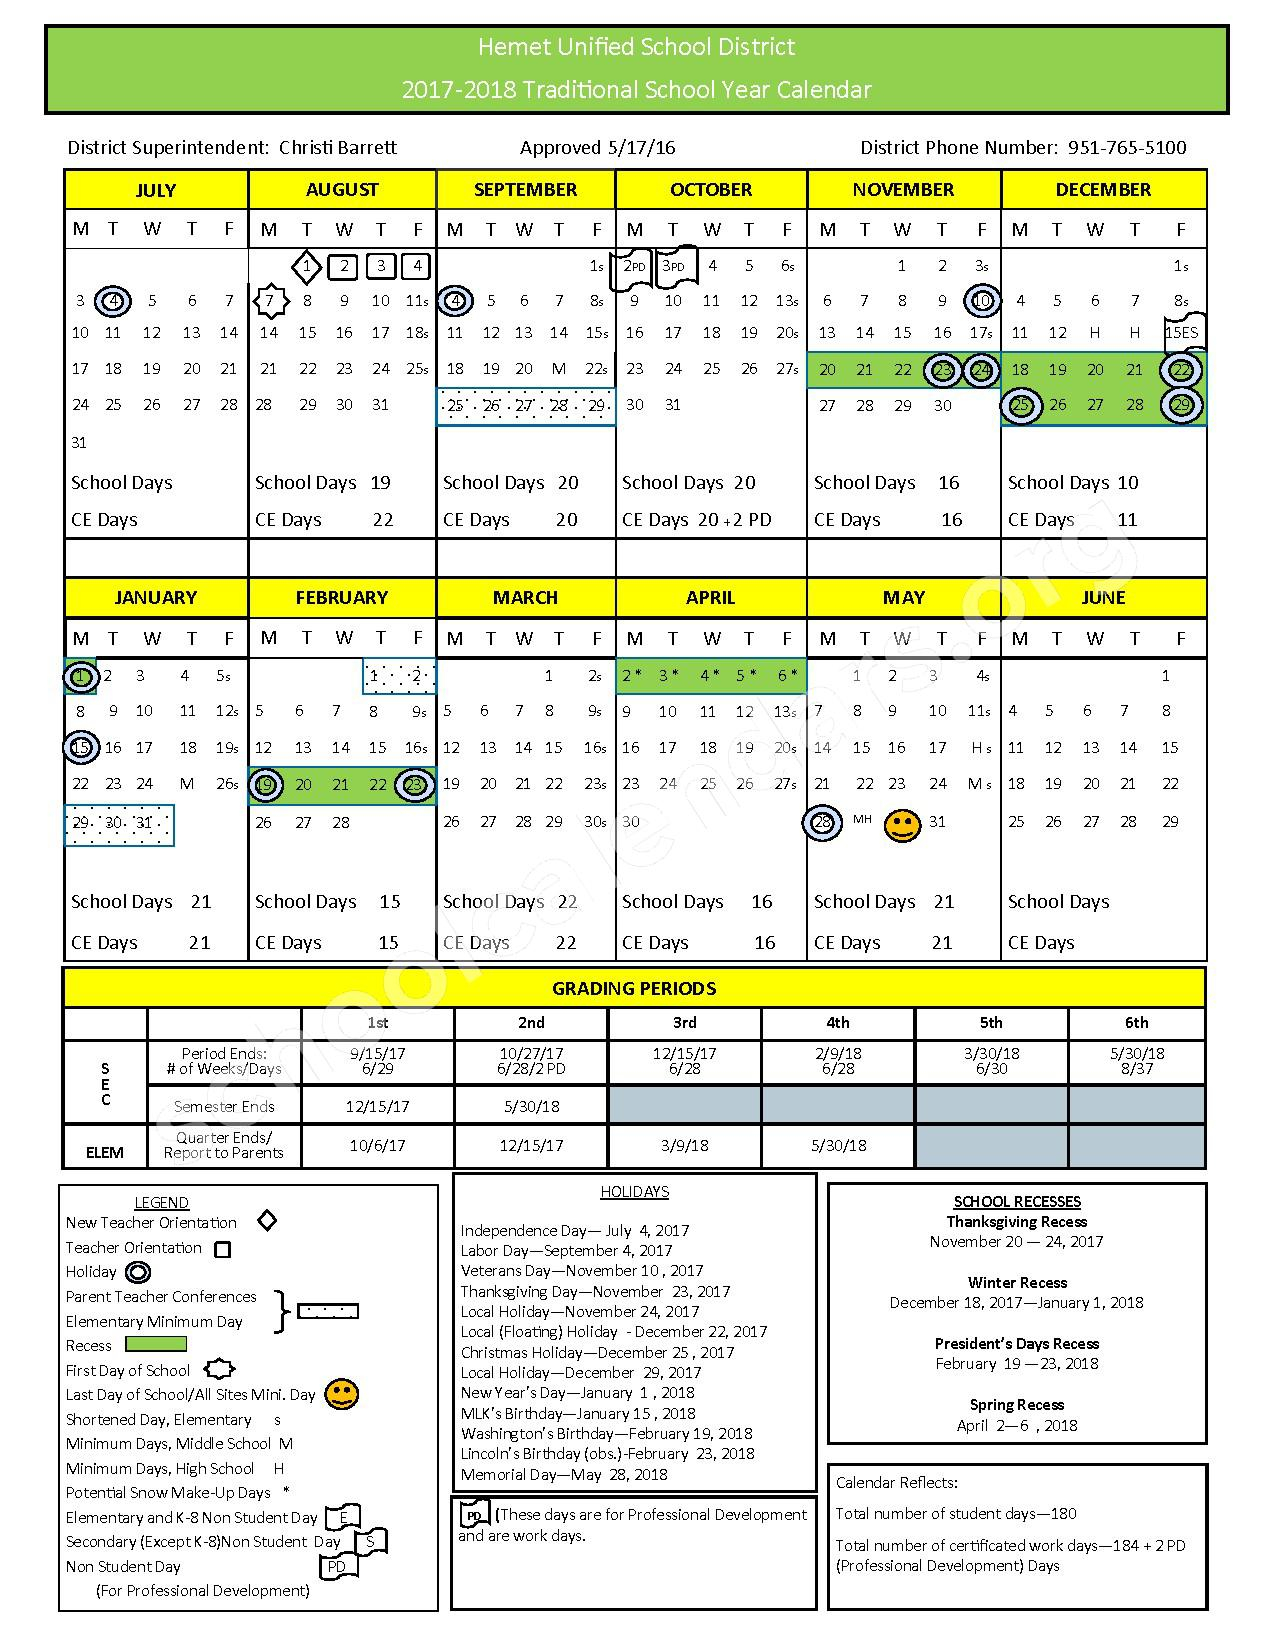 calendar-colton-school-district-53